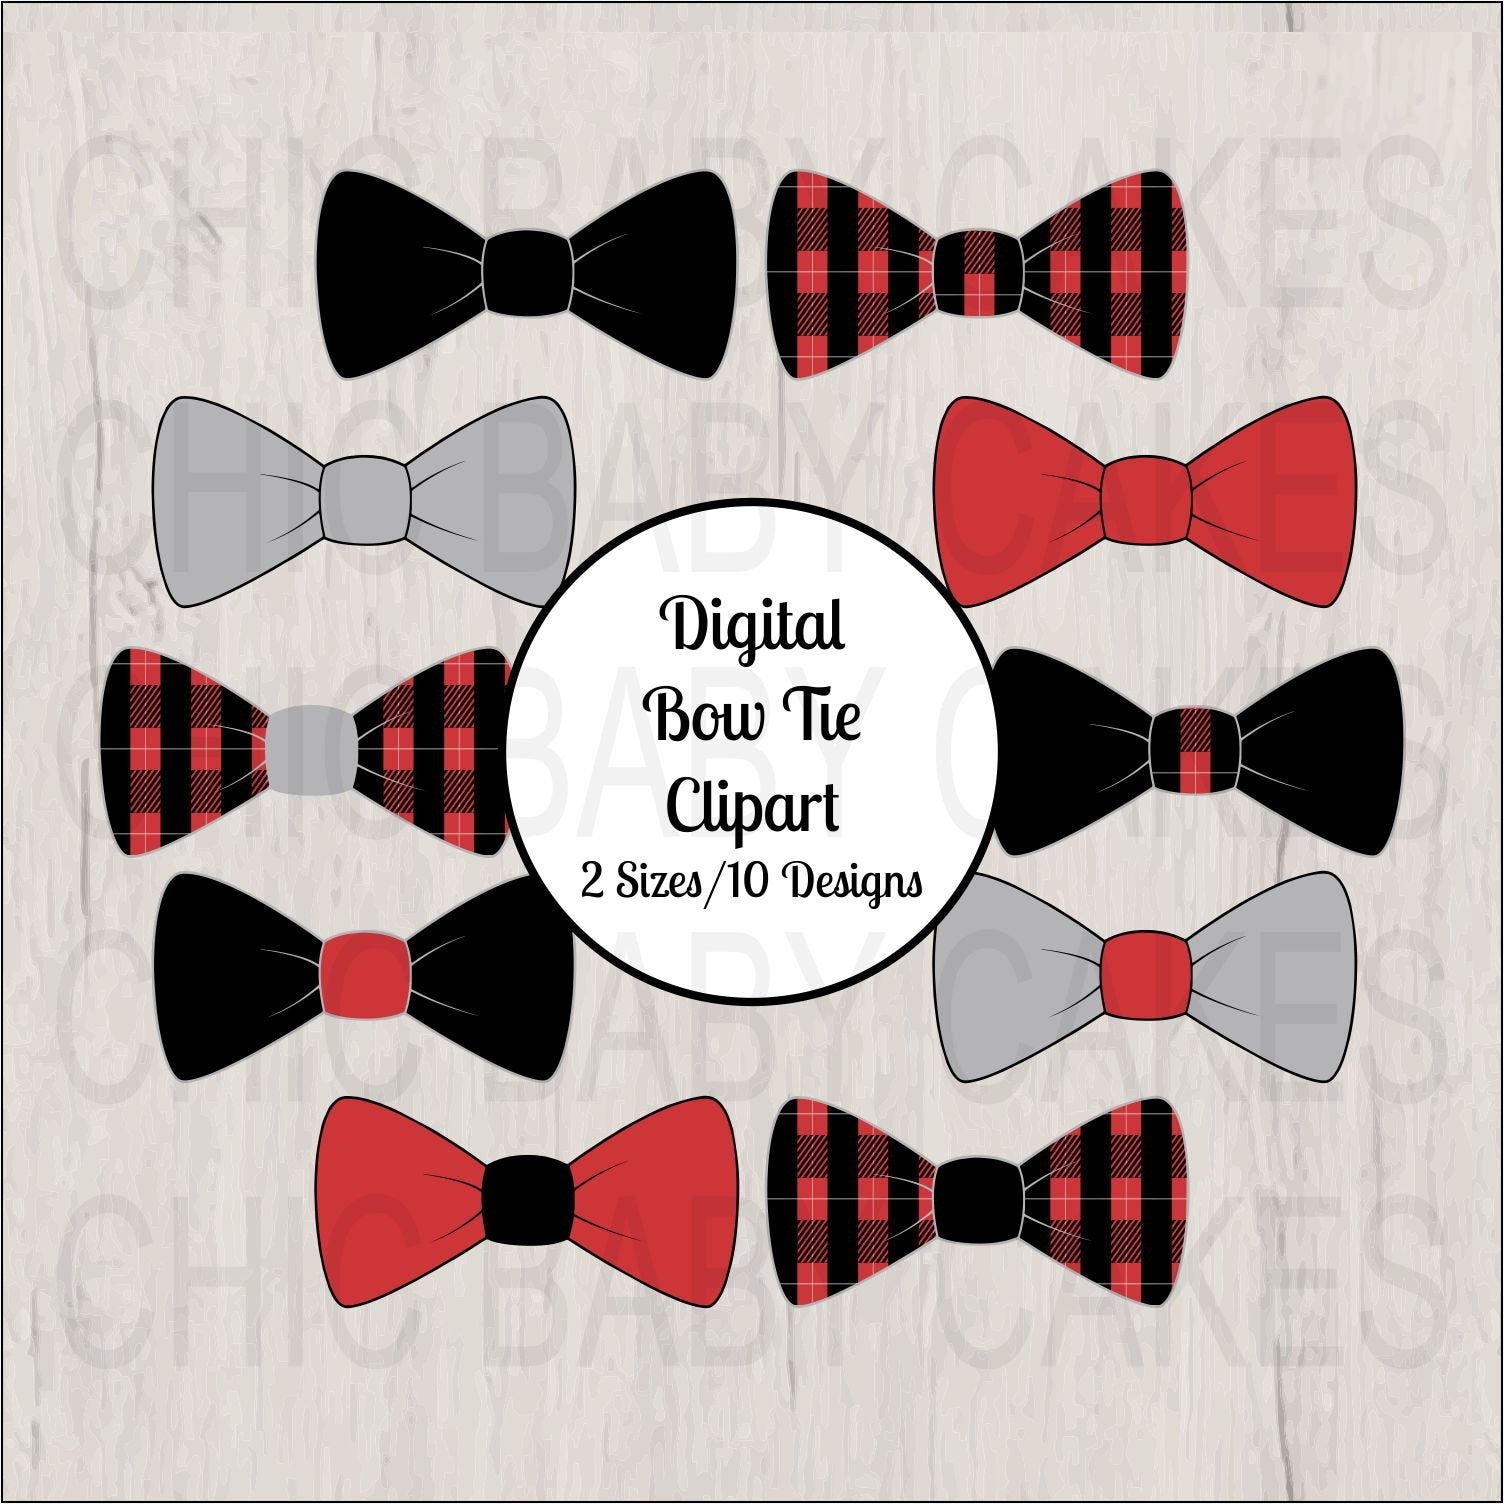 Tie Clipart Neck Tie Clip Art Tie Digital Illustration PNG 